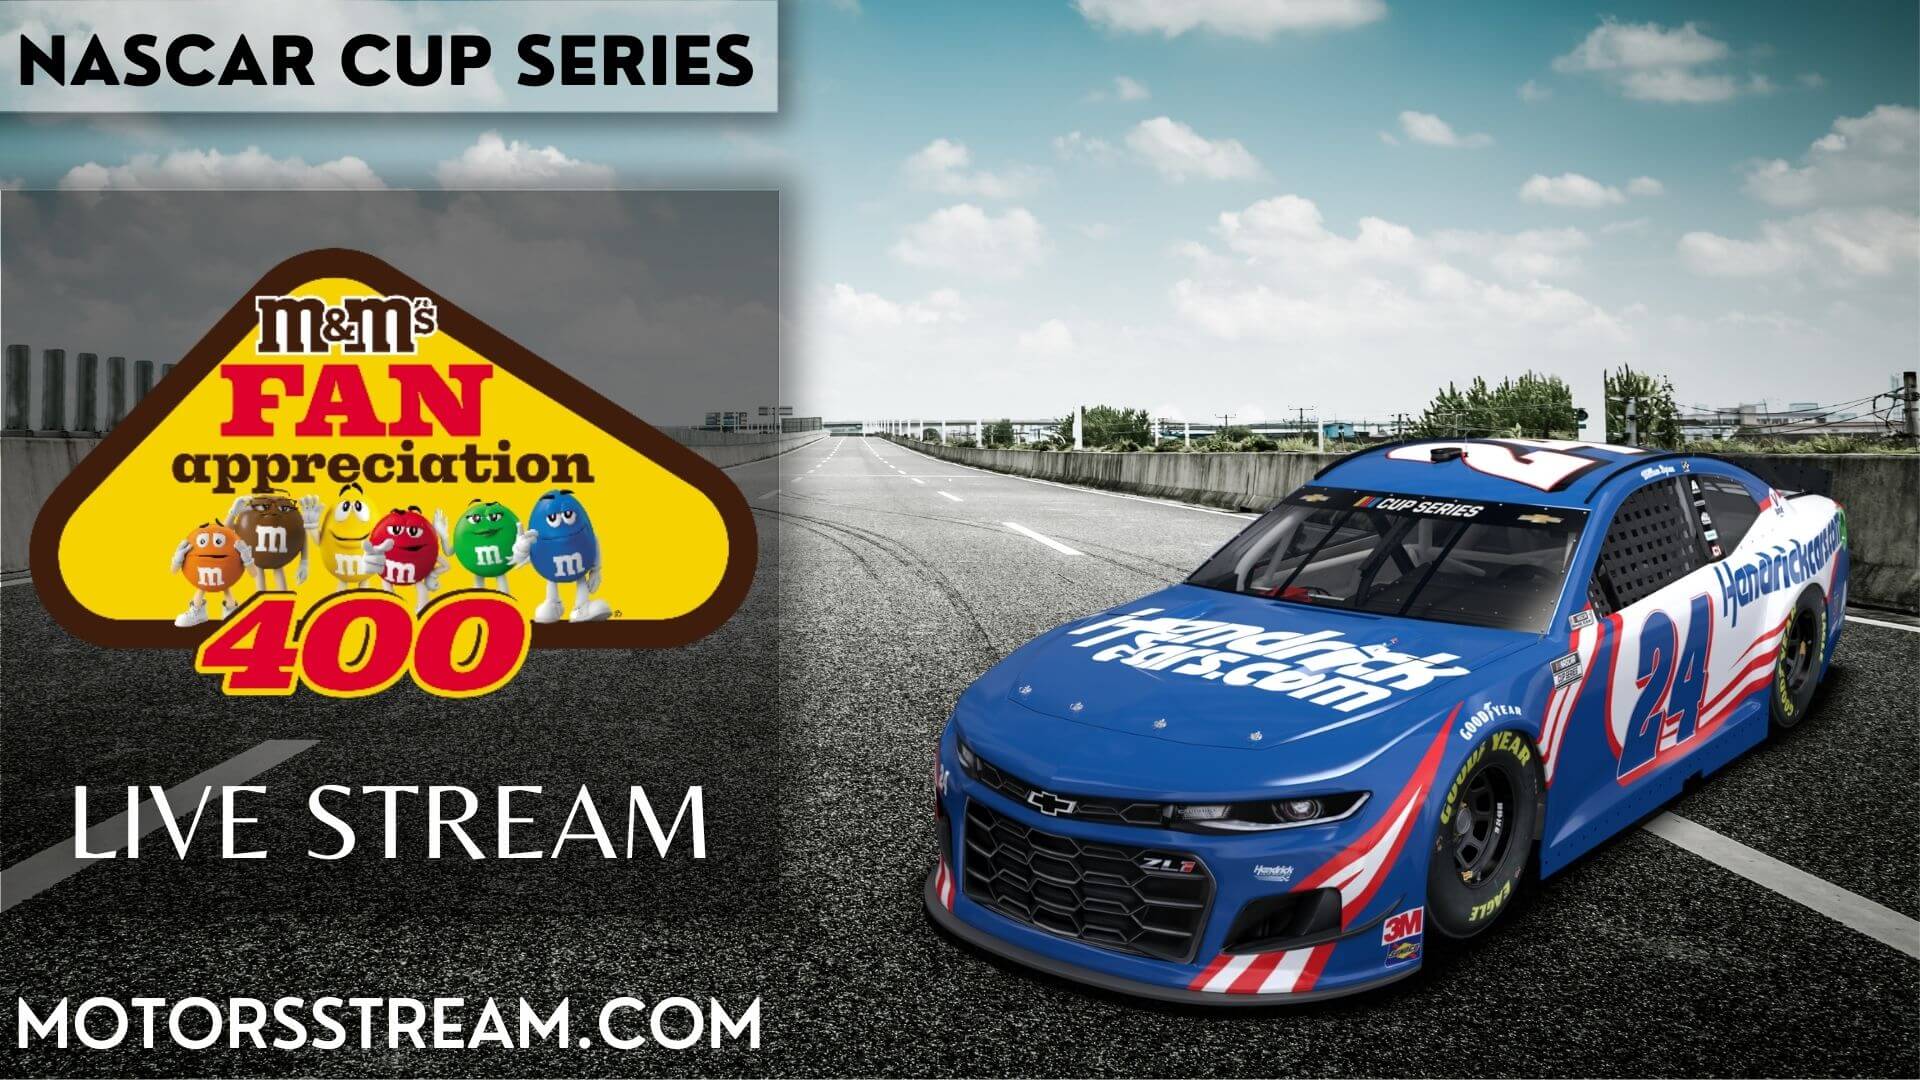 NASCAR Cup Series Pocono 350 Live Stream